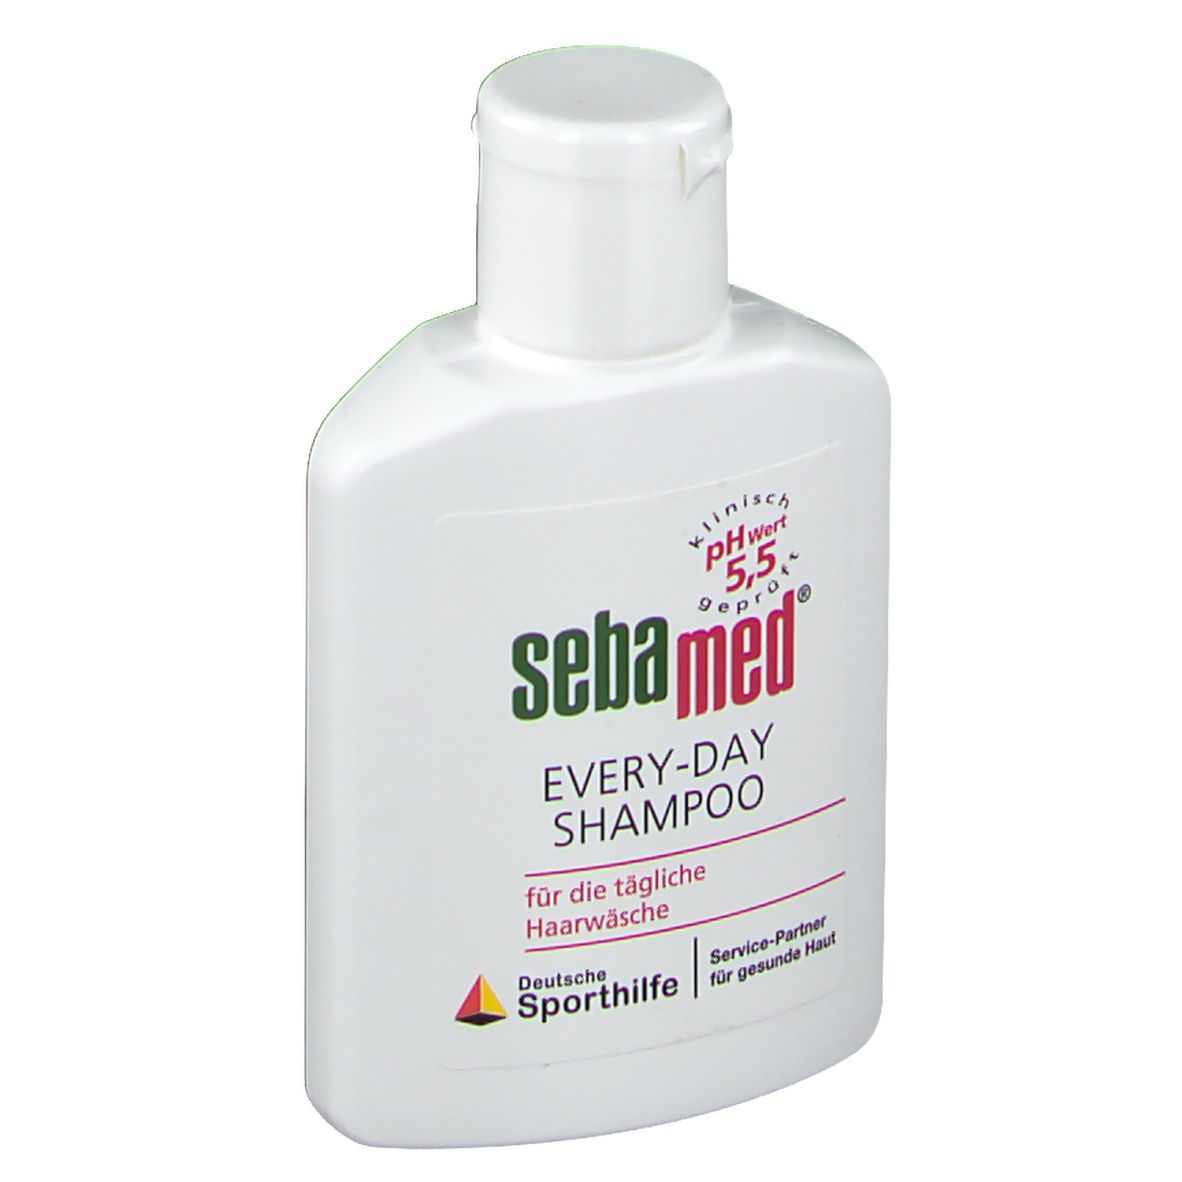 sebamed® Every-Day Shampoo